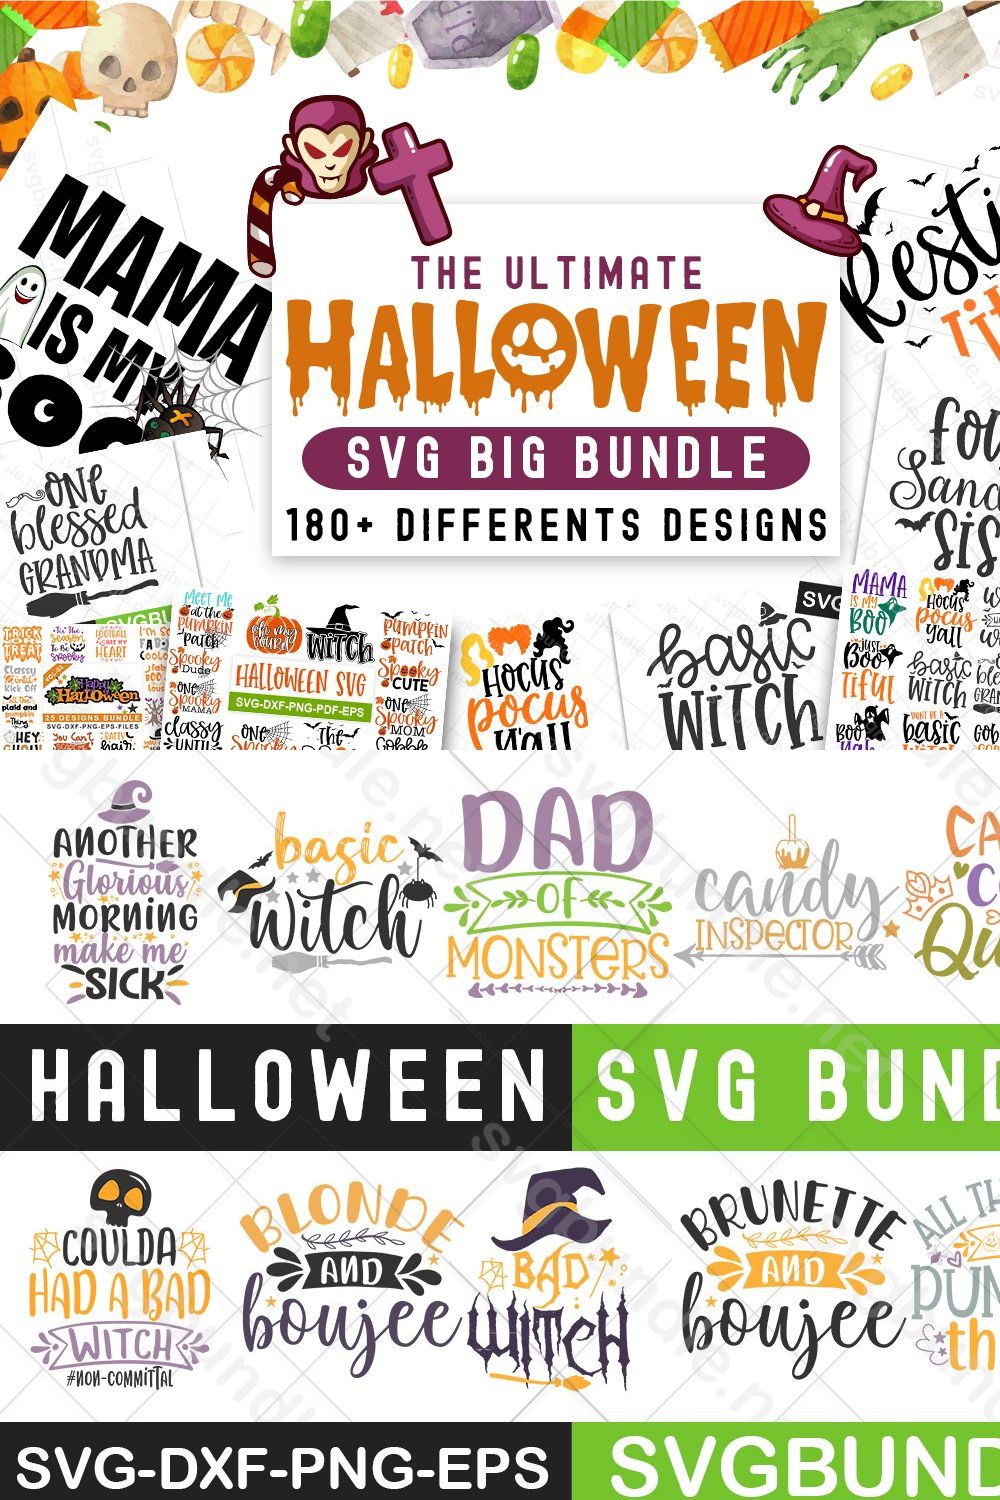 180+ Halloween SVG Big Bundle pinterest preview image.